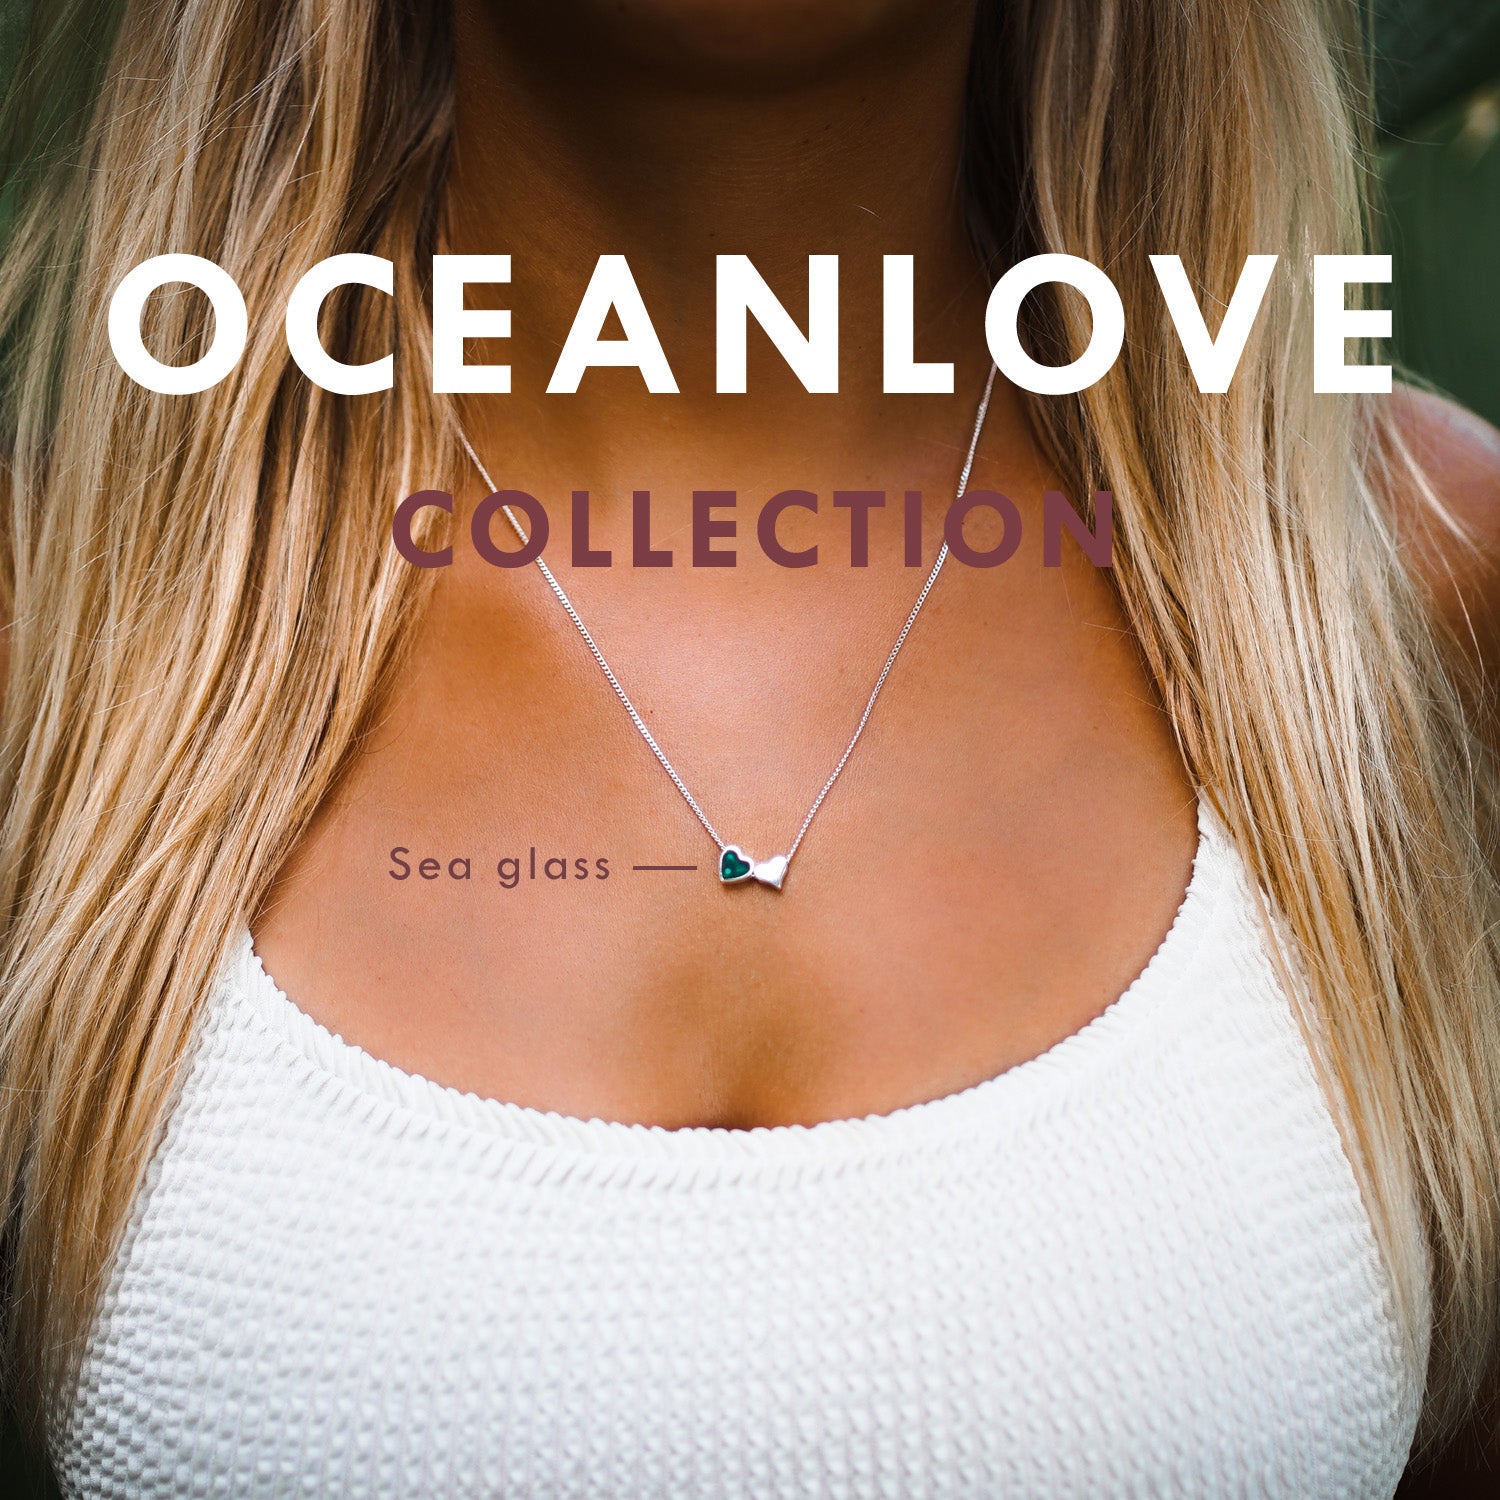 Limited Edition "Oceanlove" Sea Glass Halskette